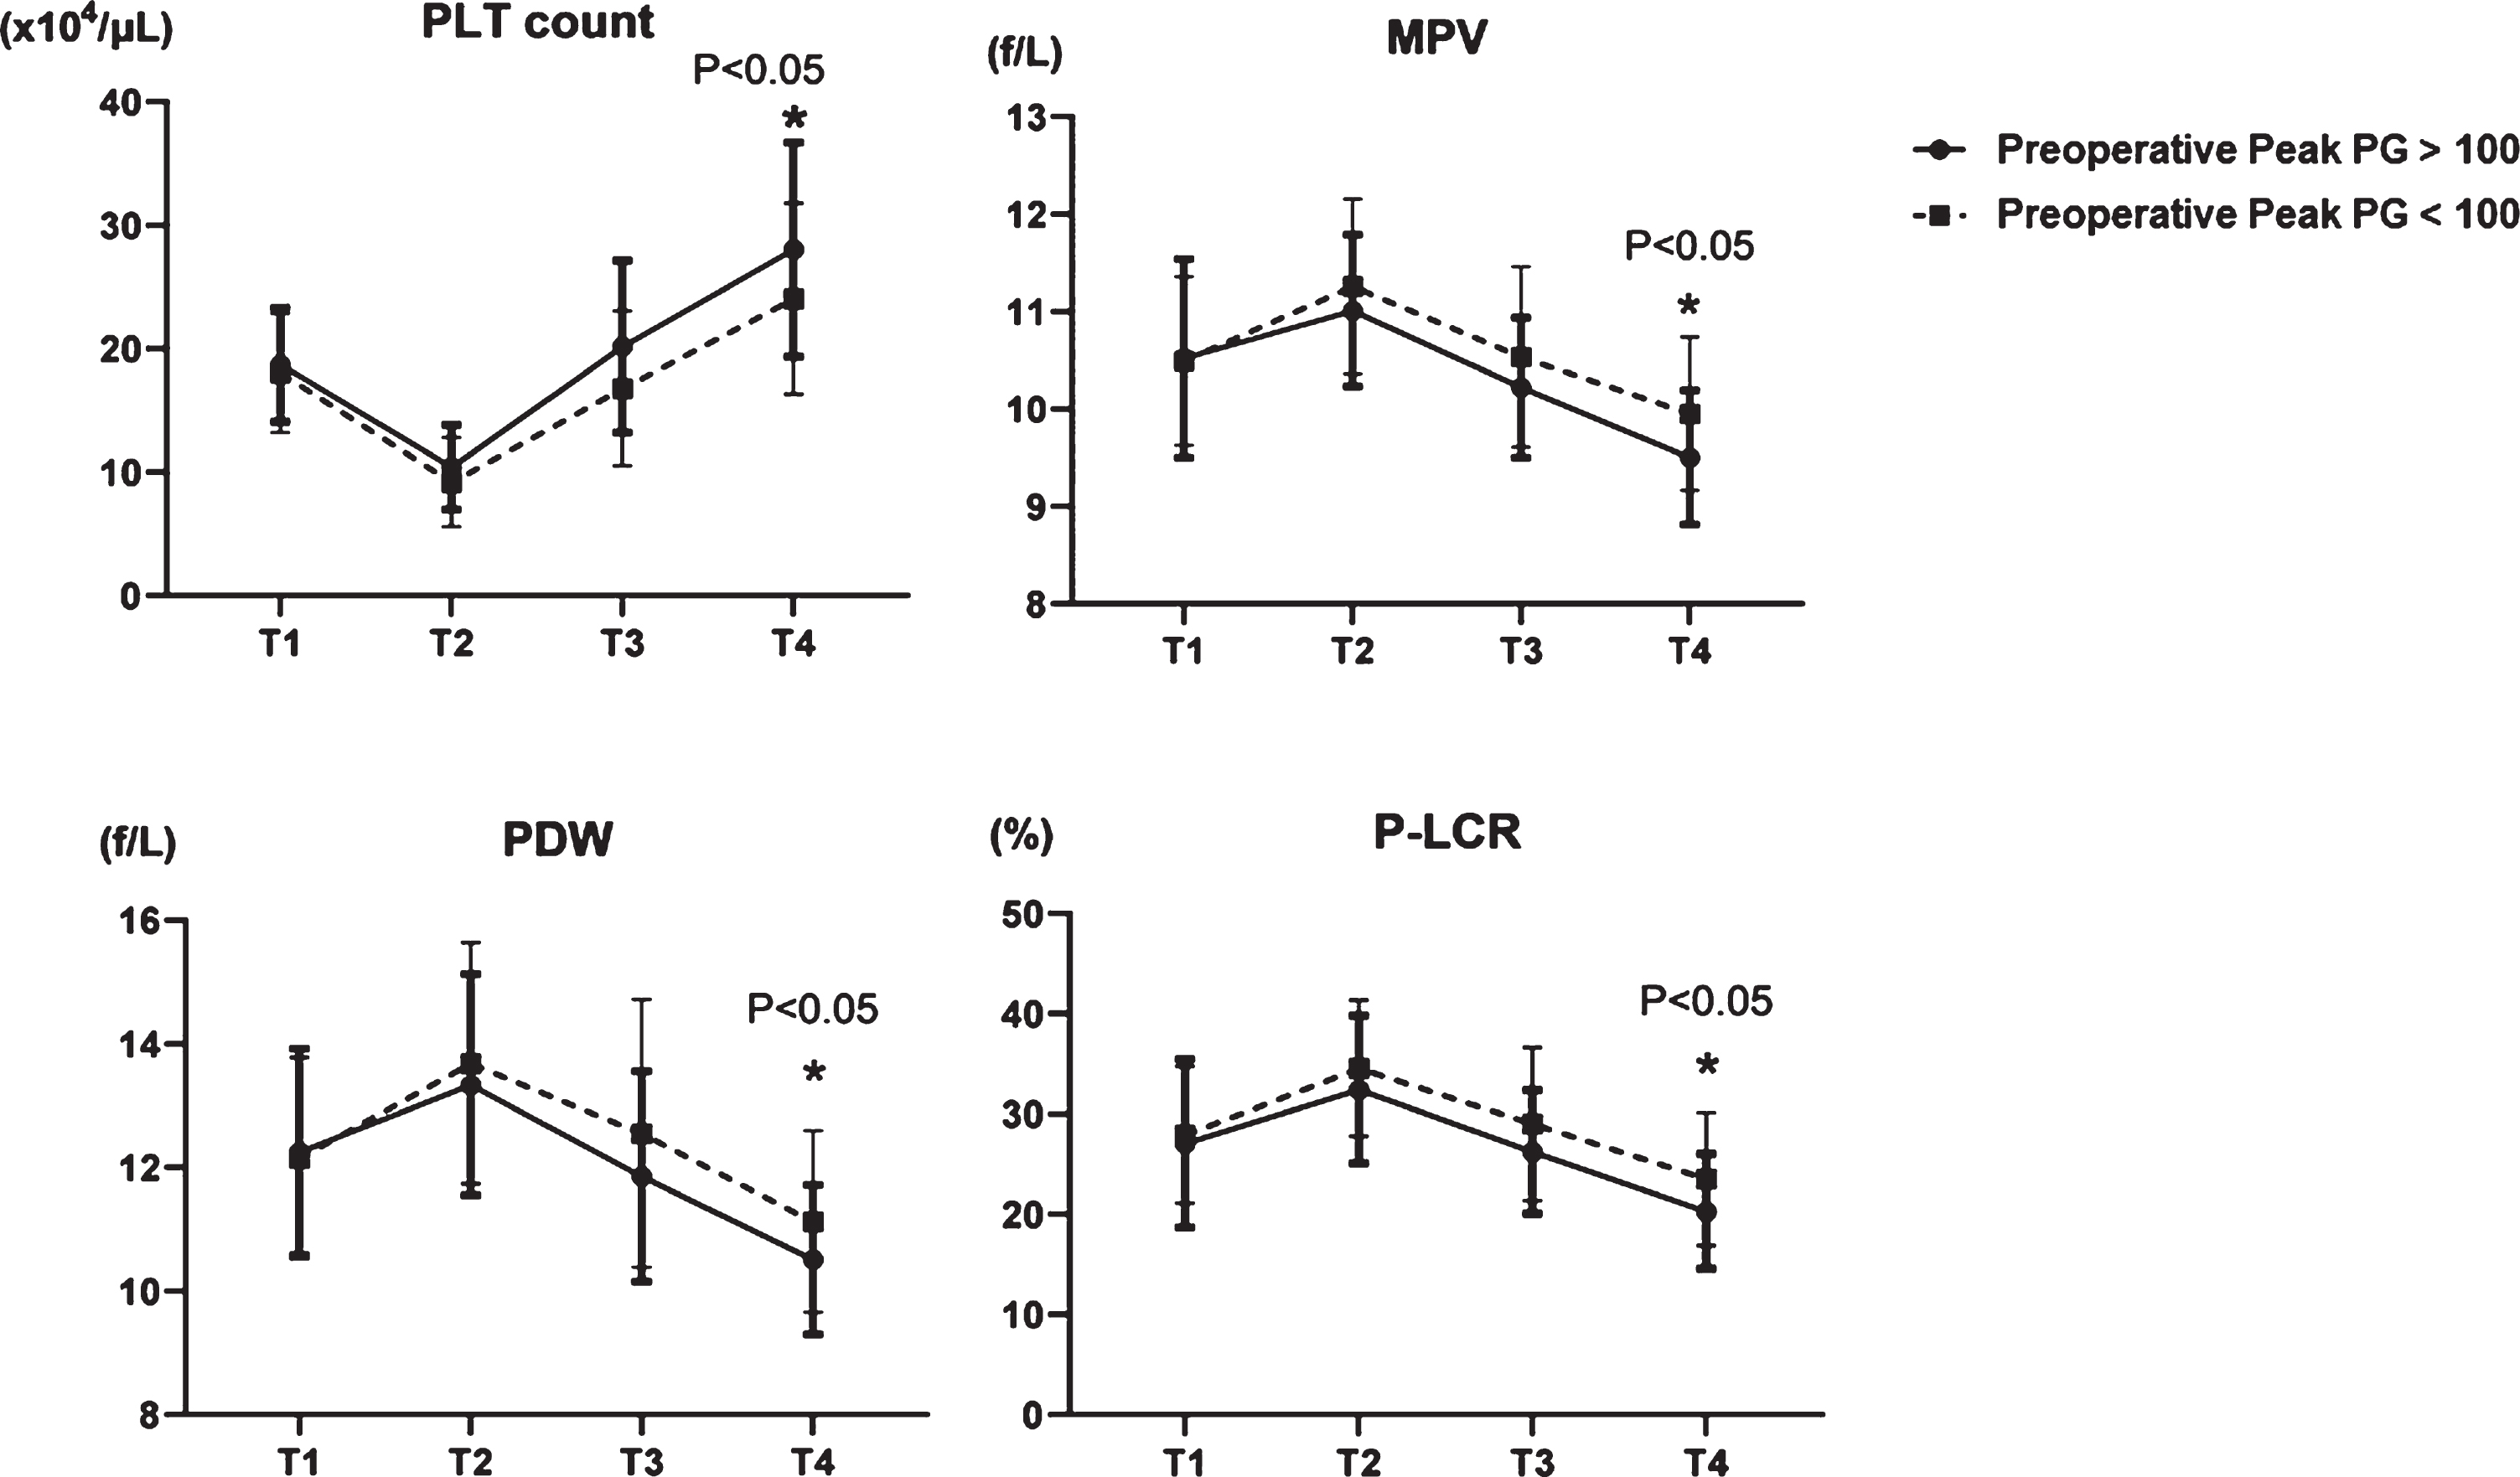 Comparison of four platelet factors in two groups; HPPG (Peak PG >100 mmHg) vs LPPG (Peak PG <100 mmHg). PLT: platelet, MPV: mean platelet volume, PDW: platelet distribution width, and P-LCR: platelet large cell ratio.